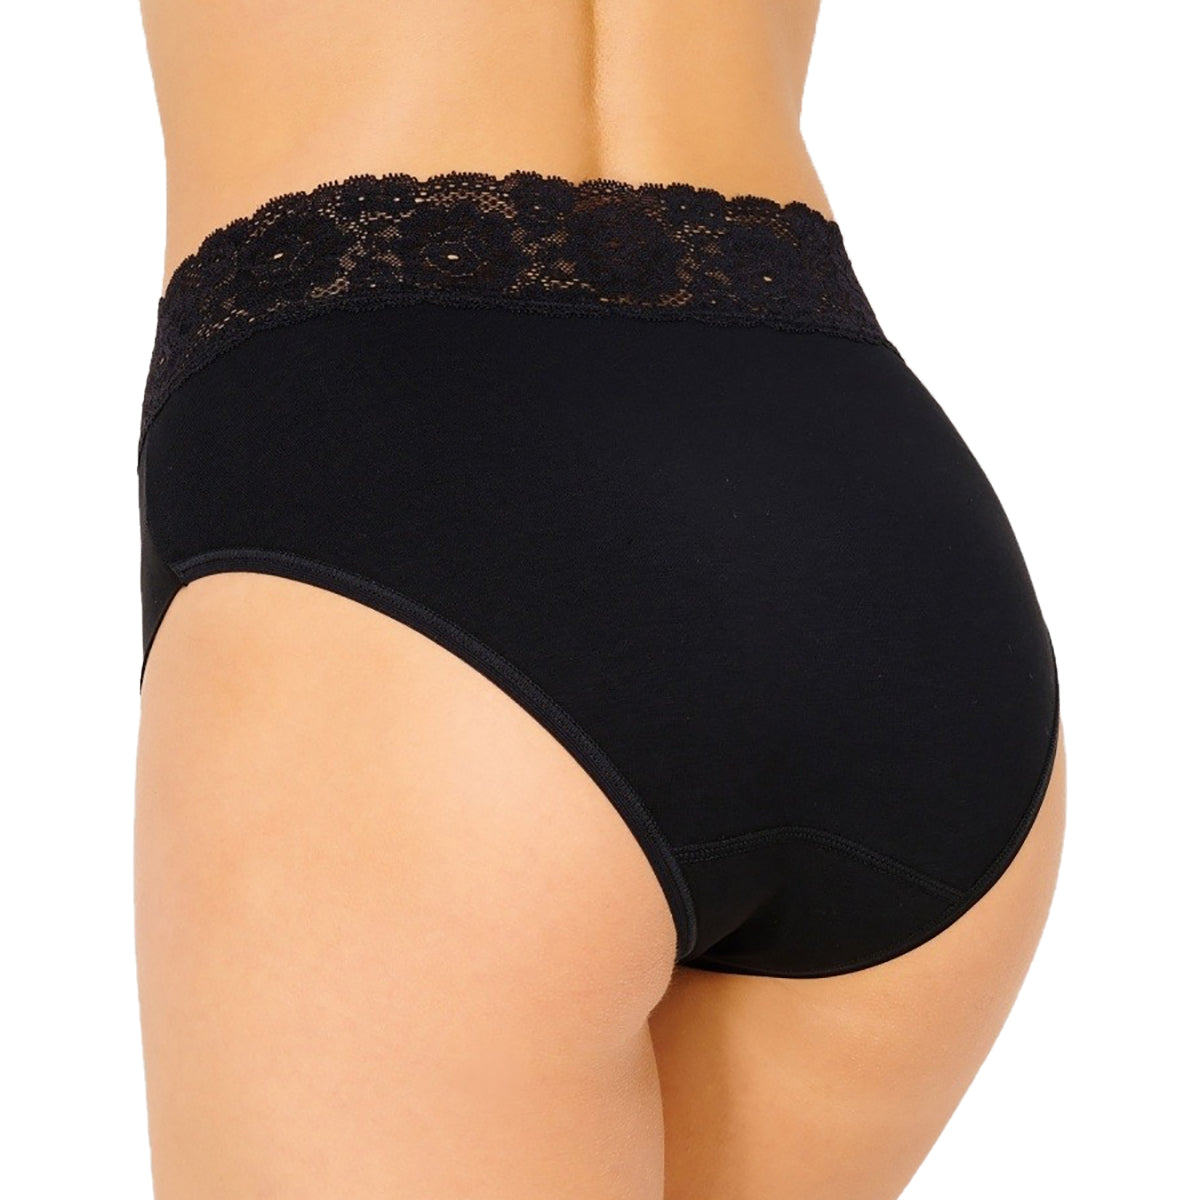 Janira dolce cinture brief black panty cotton underwear spain spanish lingerie canada linea intima